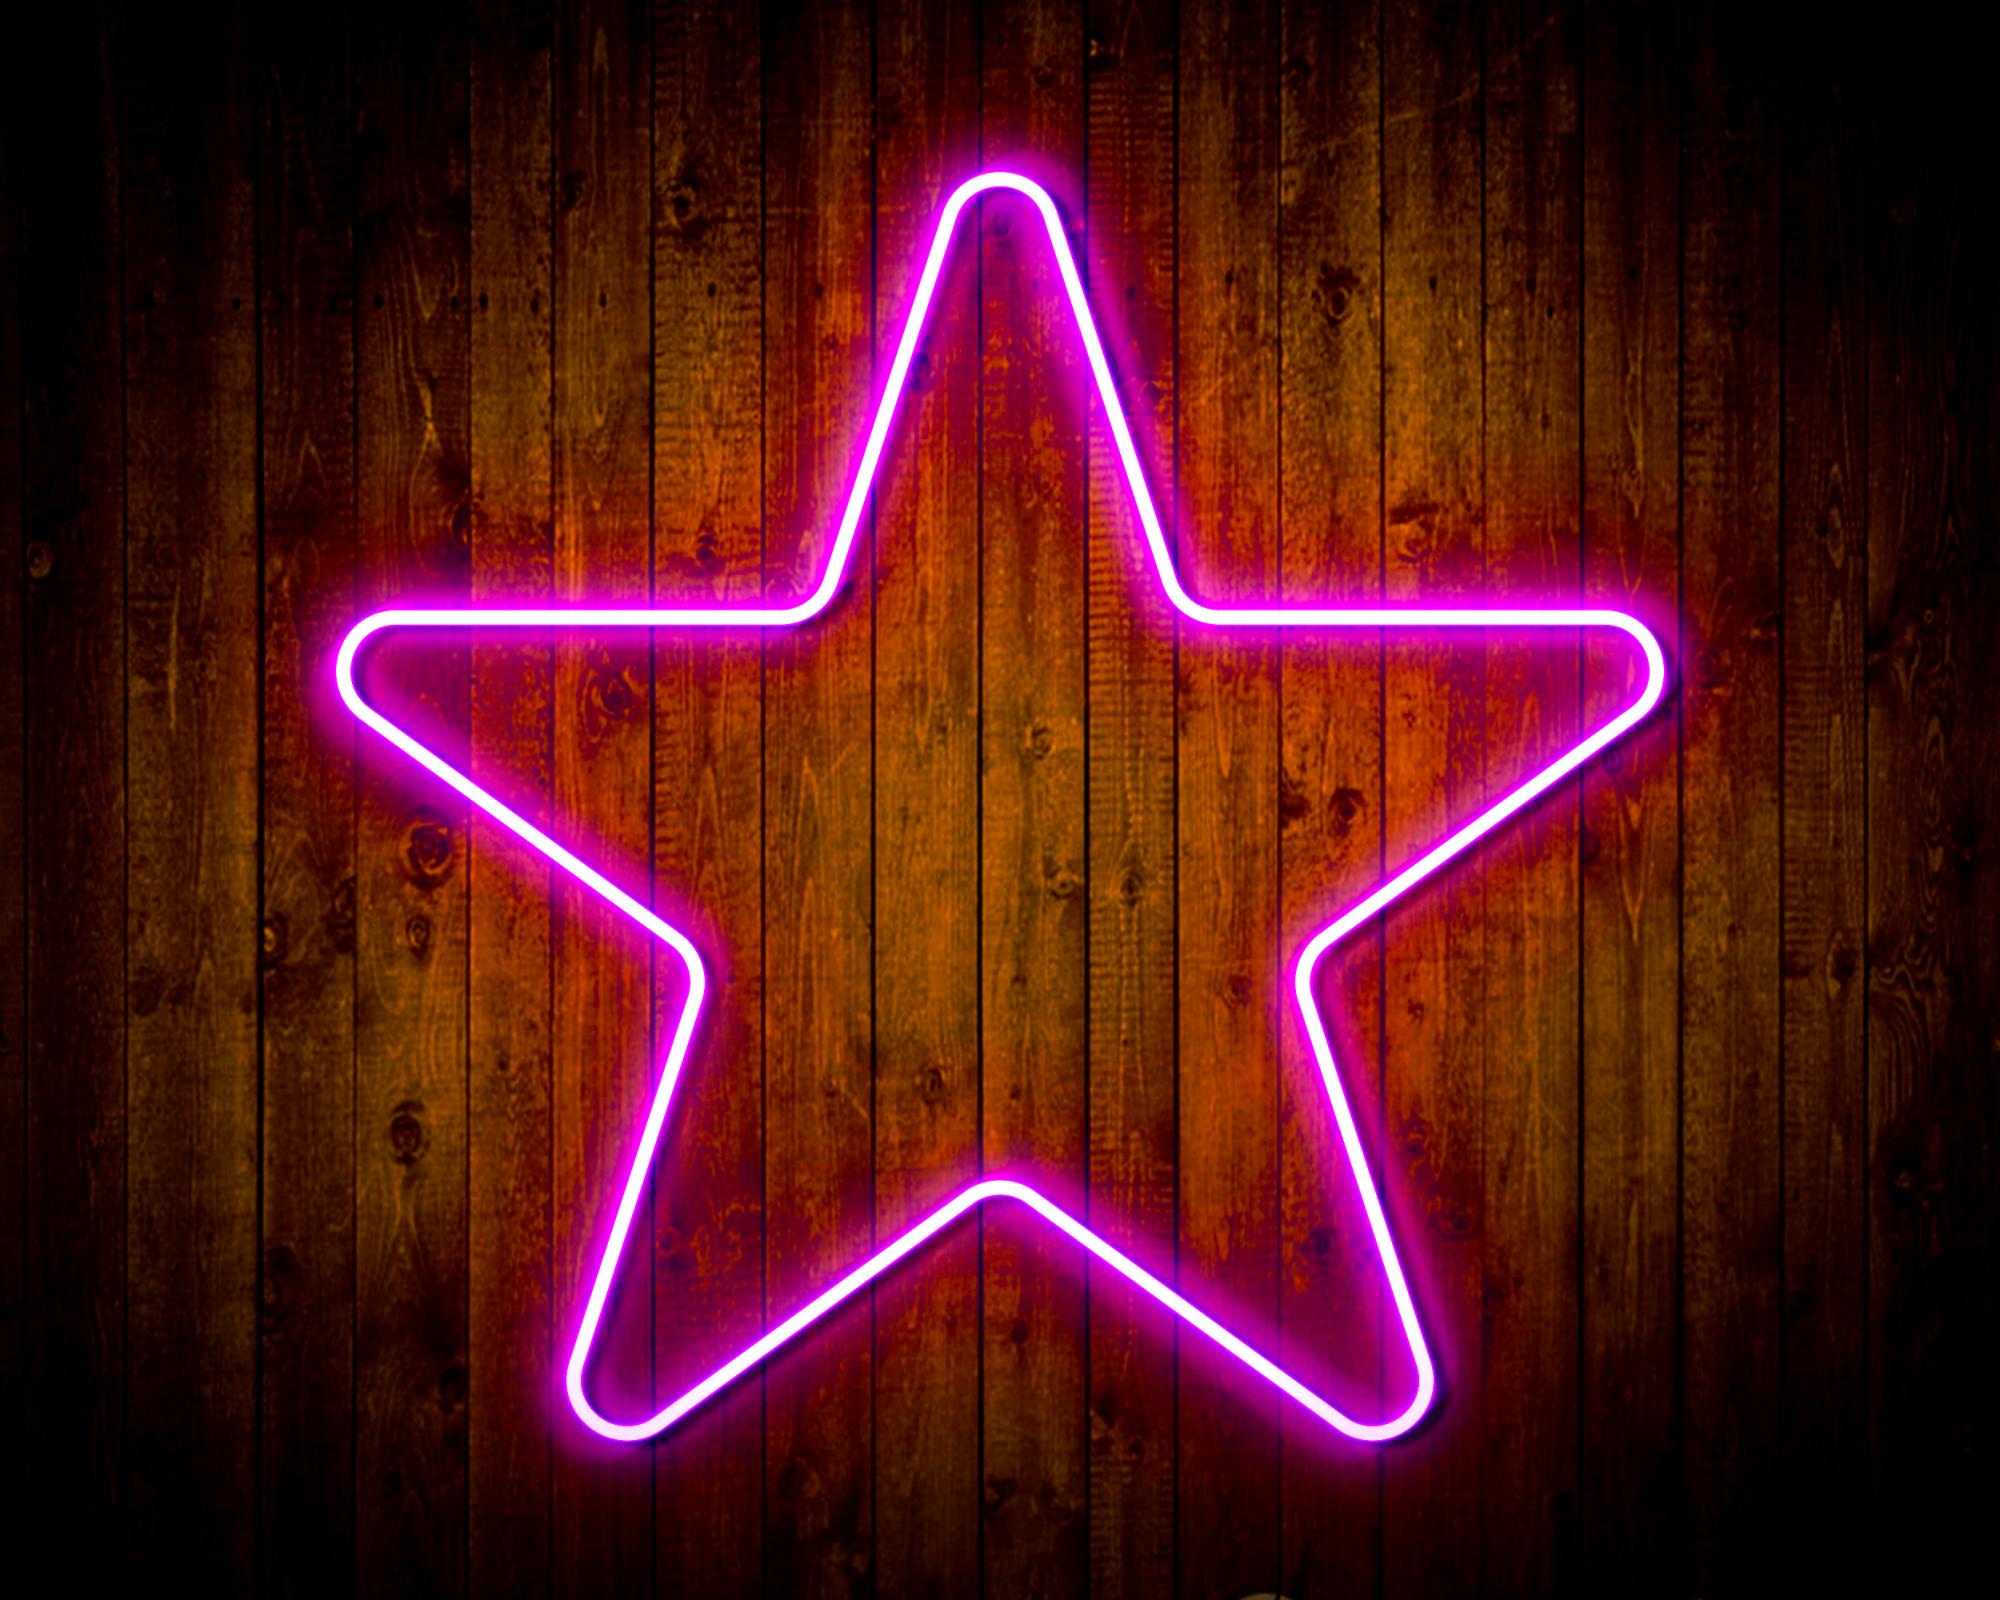 Star LED Neon Sign